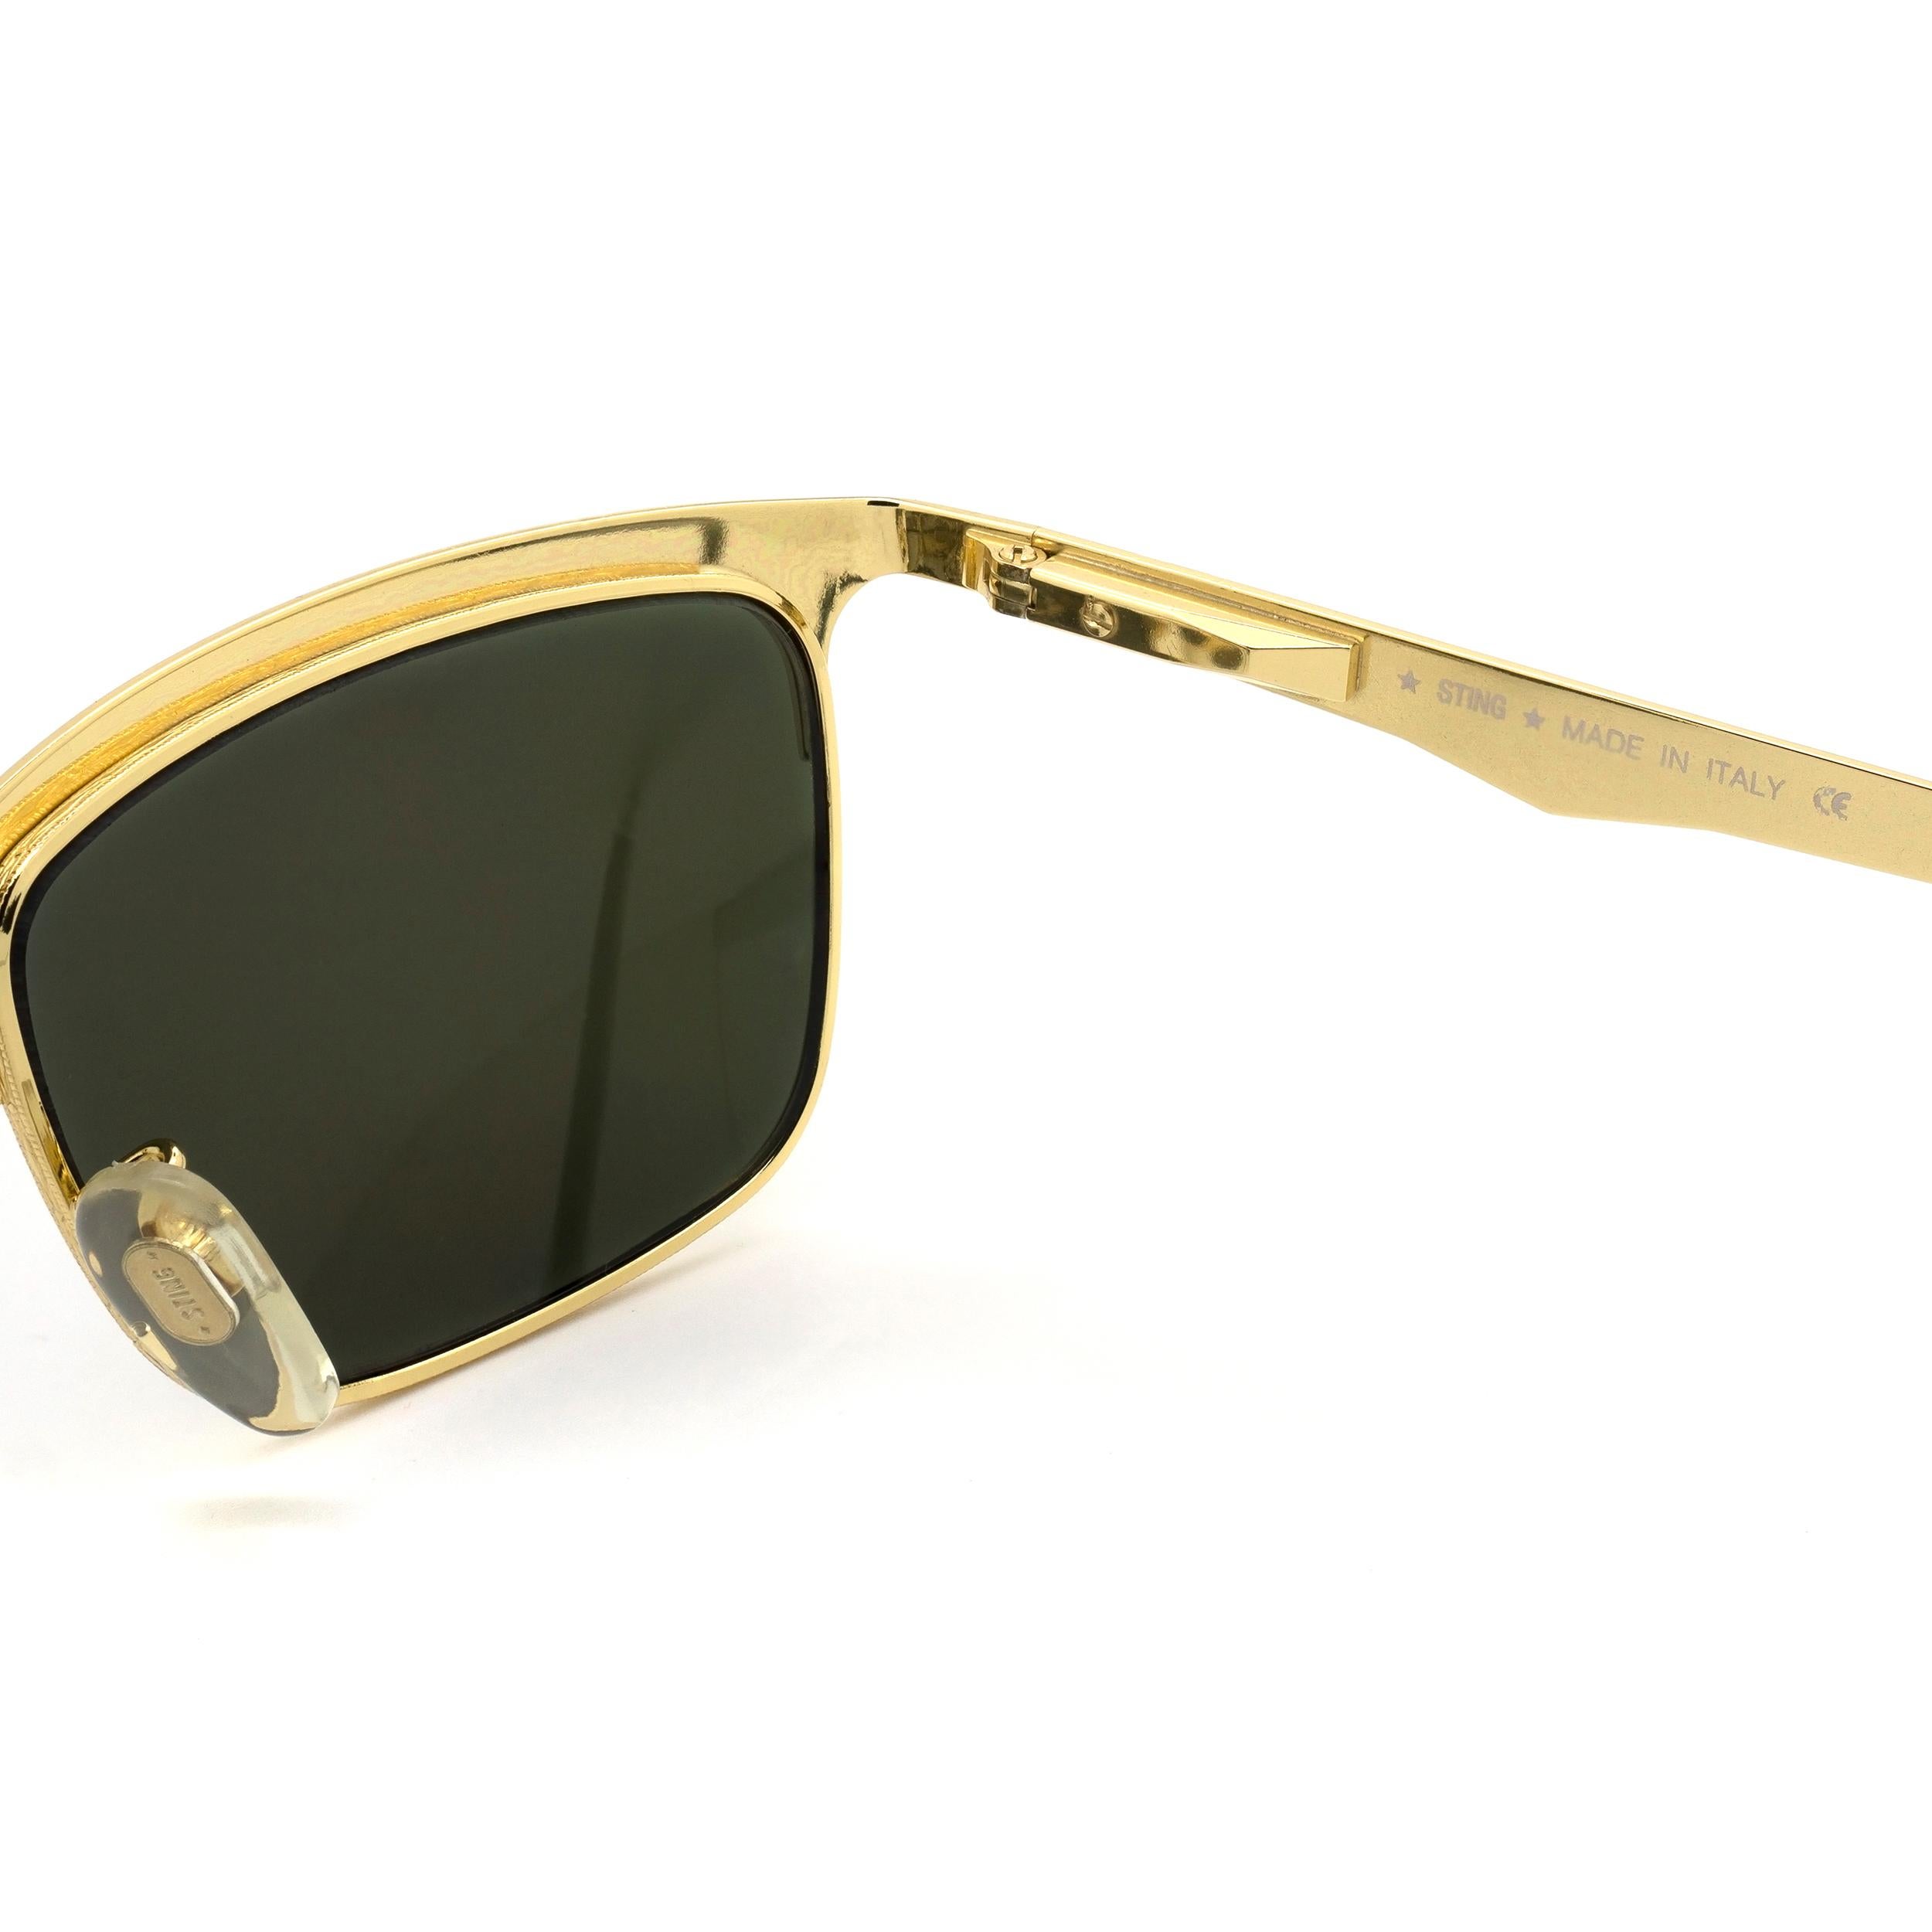 Sting gold vintage sunglasses, Italy 80s In New Condition For Sale In Santa Clarita, CA